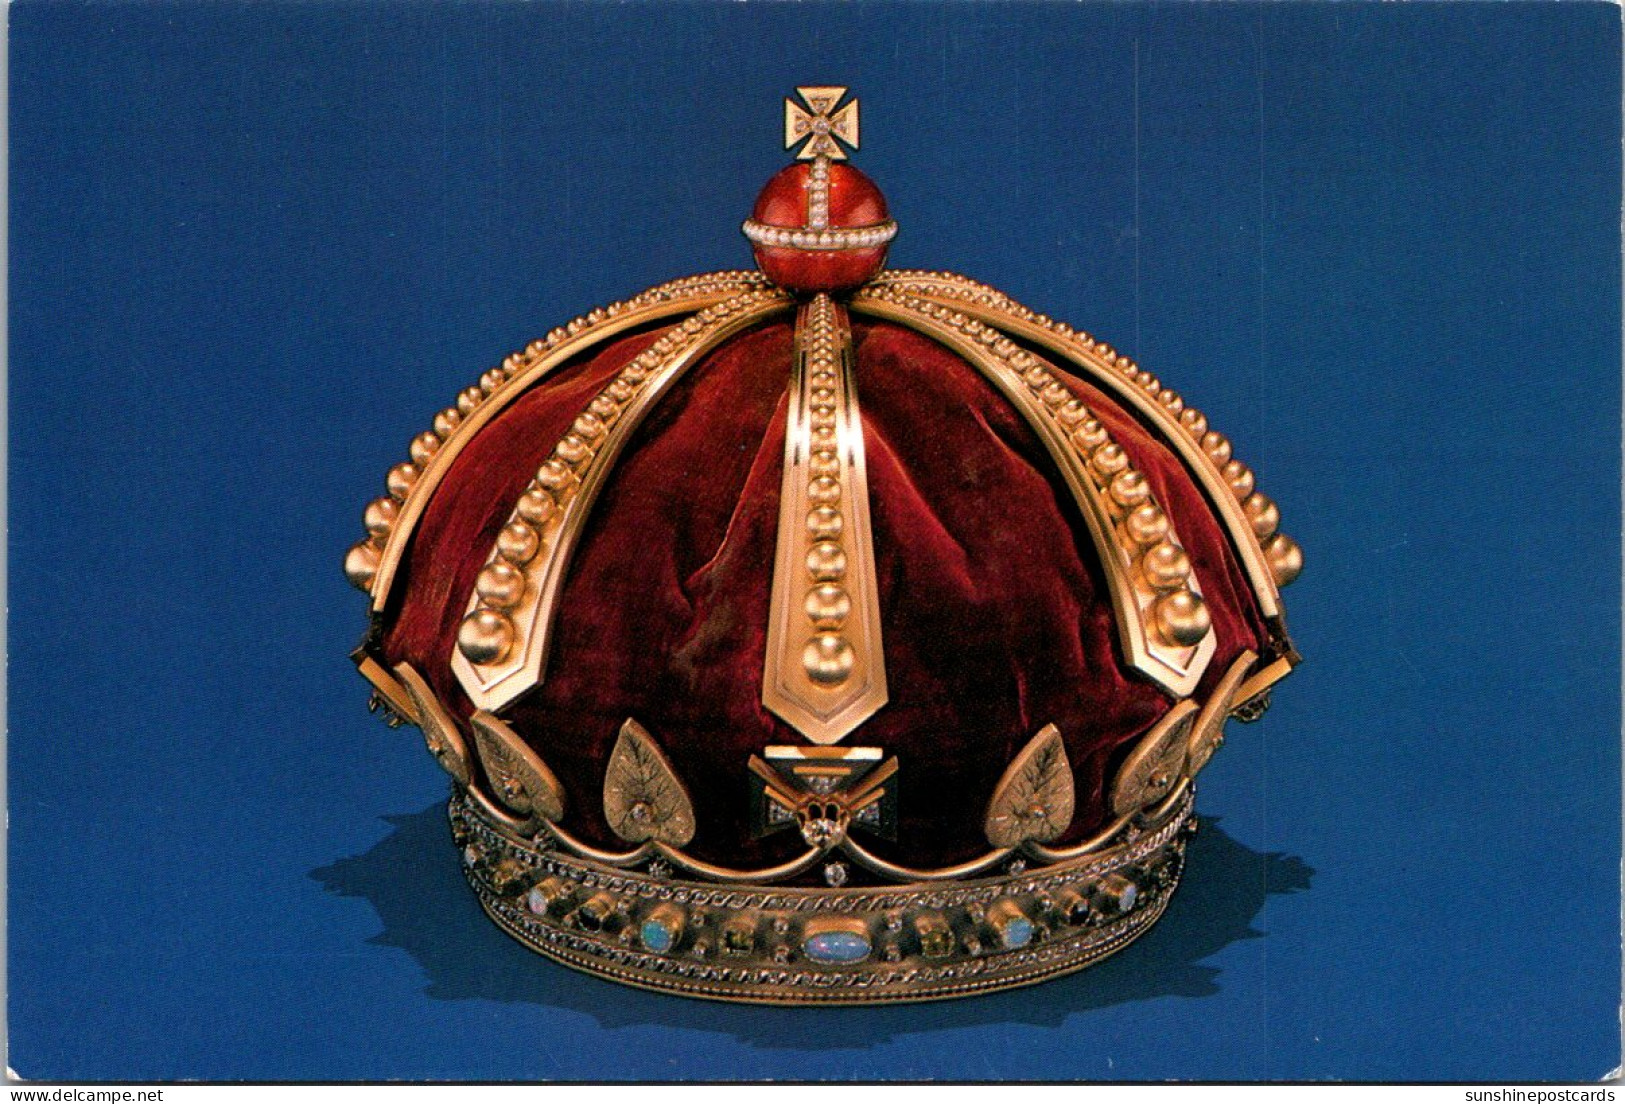 Hawaii Honolulu Bishop Museum Crown Of Hawaii Made For Coronation Of King Kalakaua And Queen Kapi'olani - Honolulu